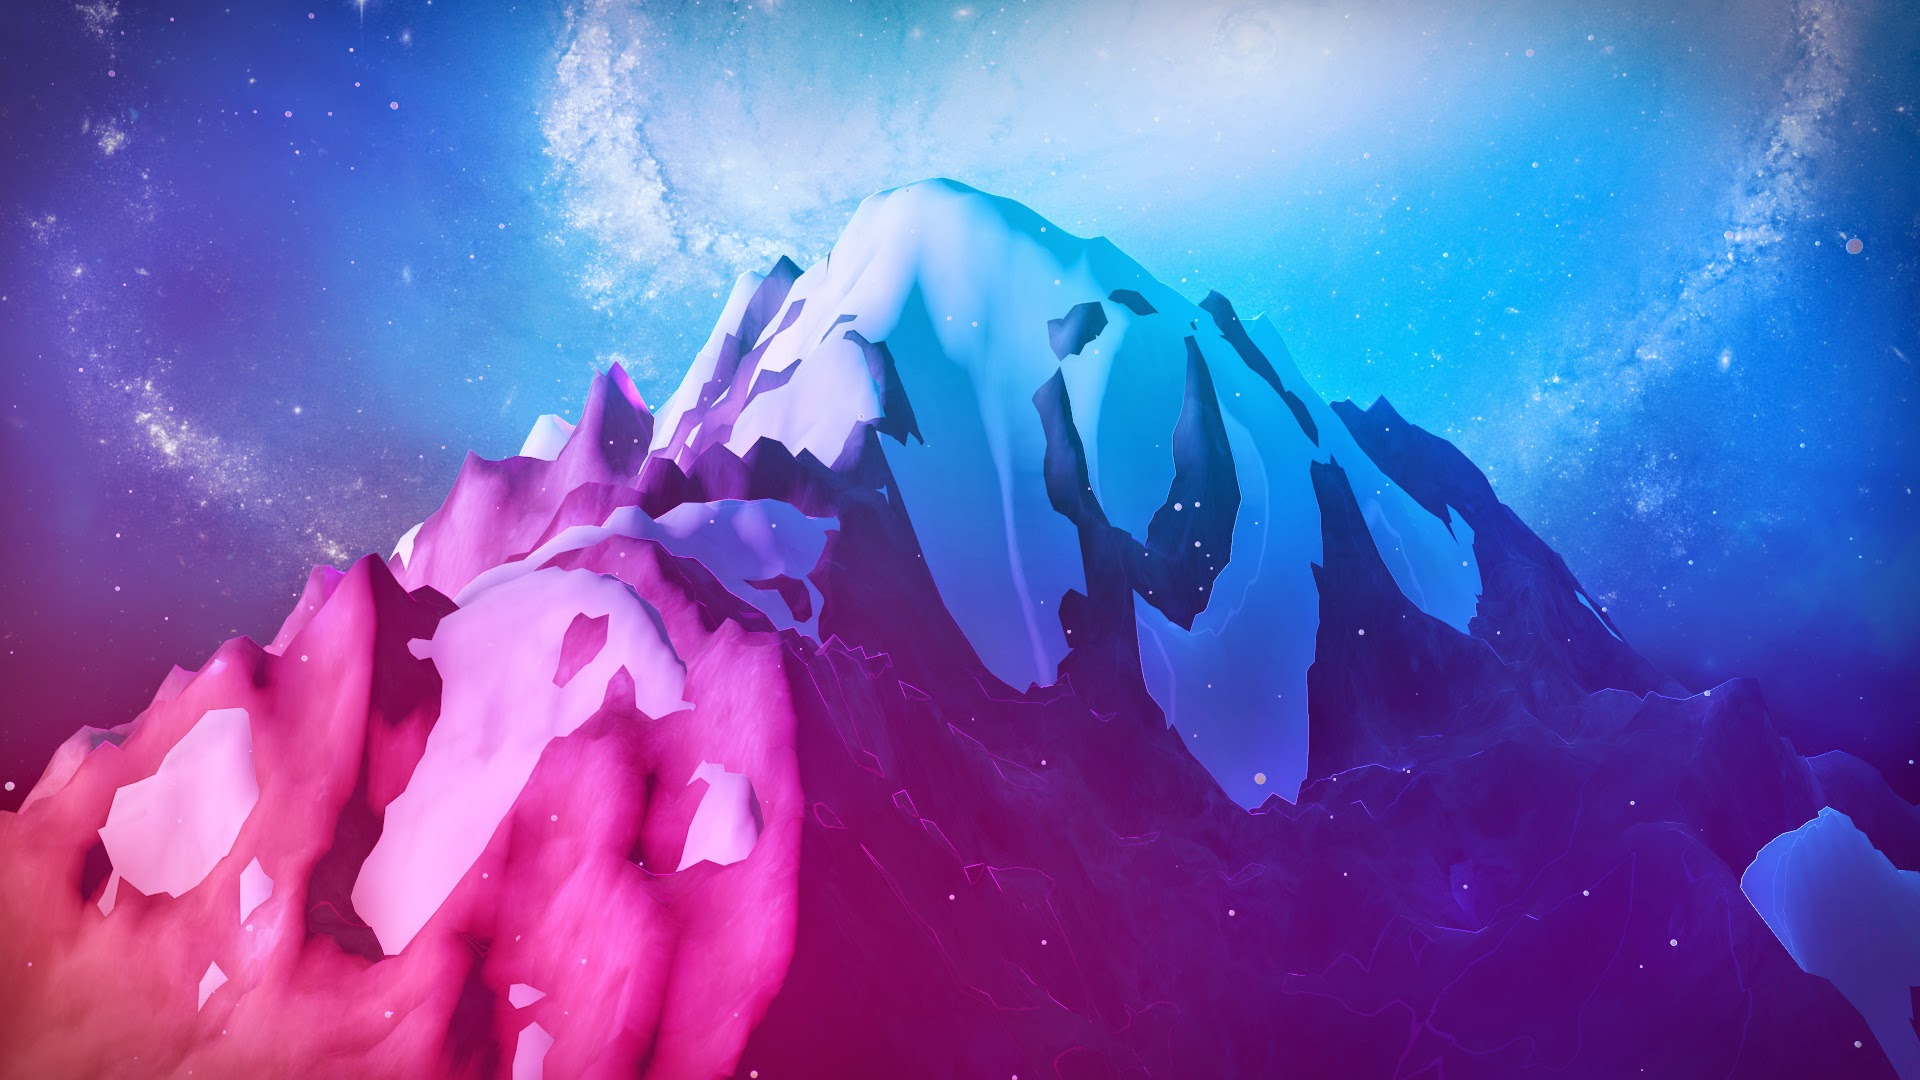 Adobe Photoshop, Mountain, Snow, Landscape, Artwork, Digital Art, Milky Way, Galaxy Wallpaper